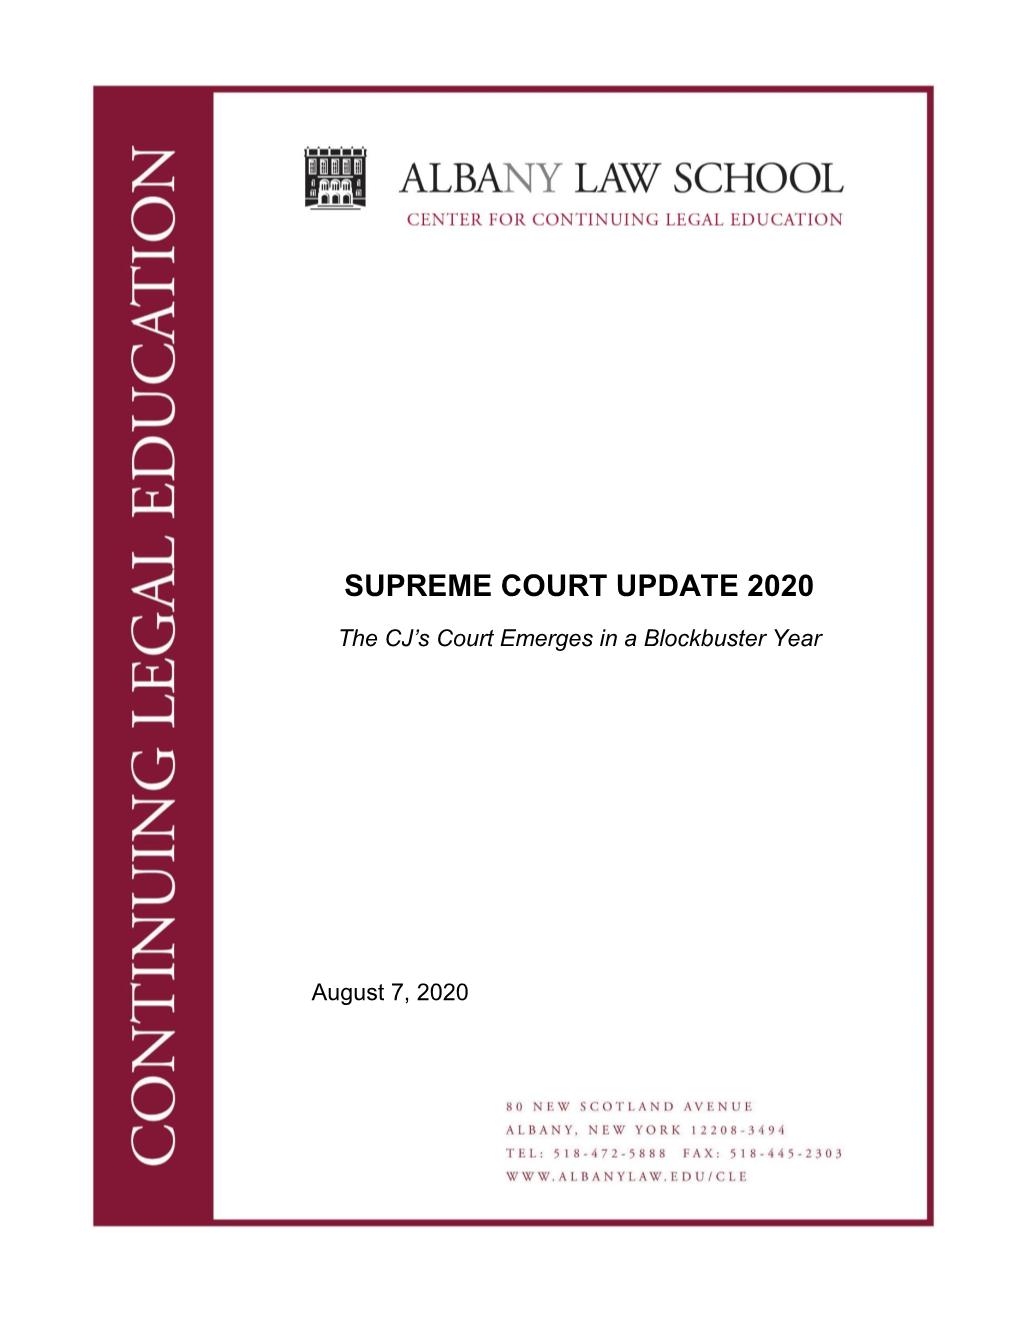 Supreme Court Update 2020 Program Materials